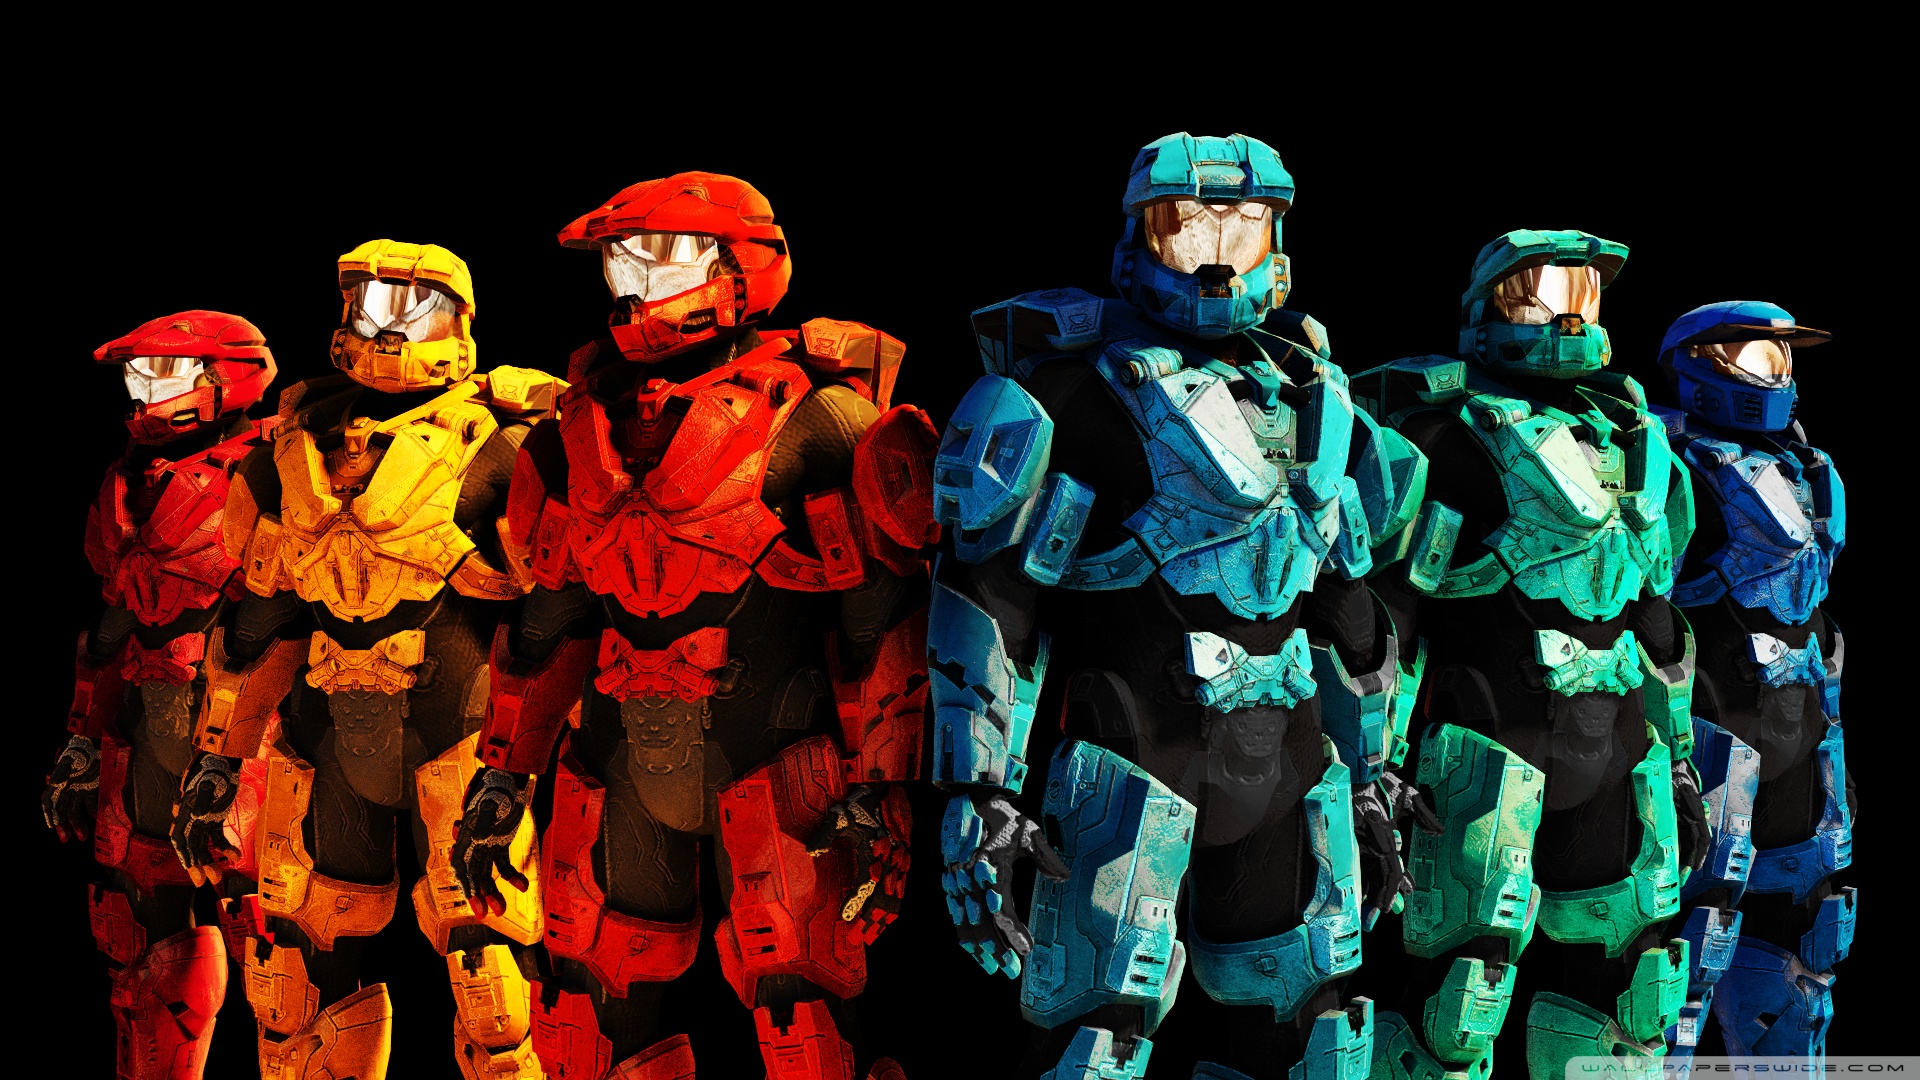 Blu v. Halo Red vs Blue игра. Halo Red vs Blue персонажи. Хало синие против красных.